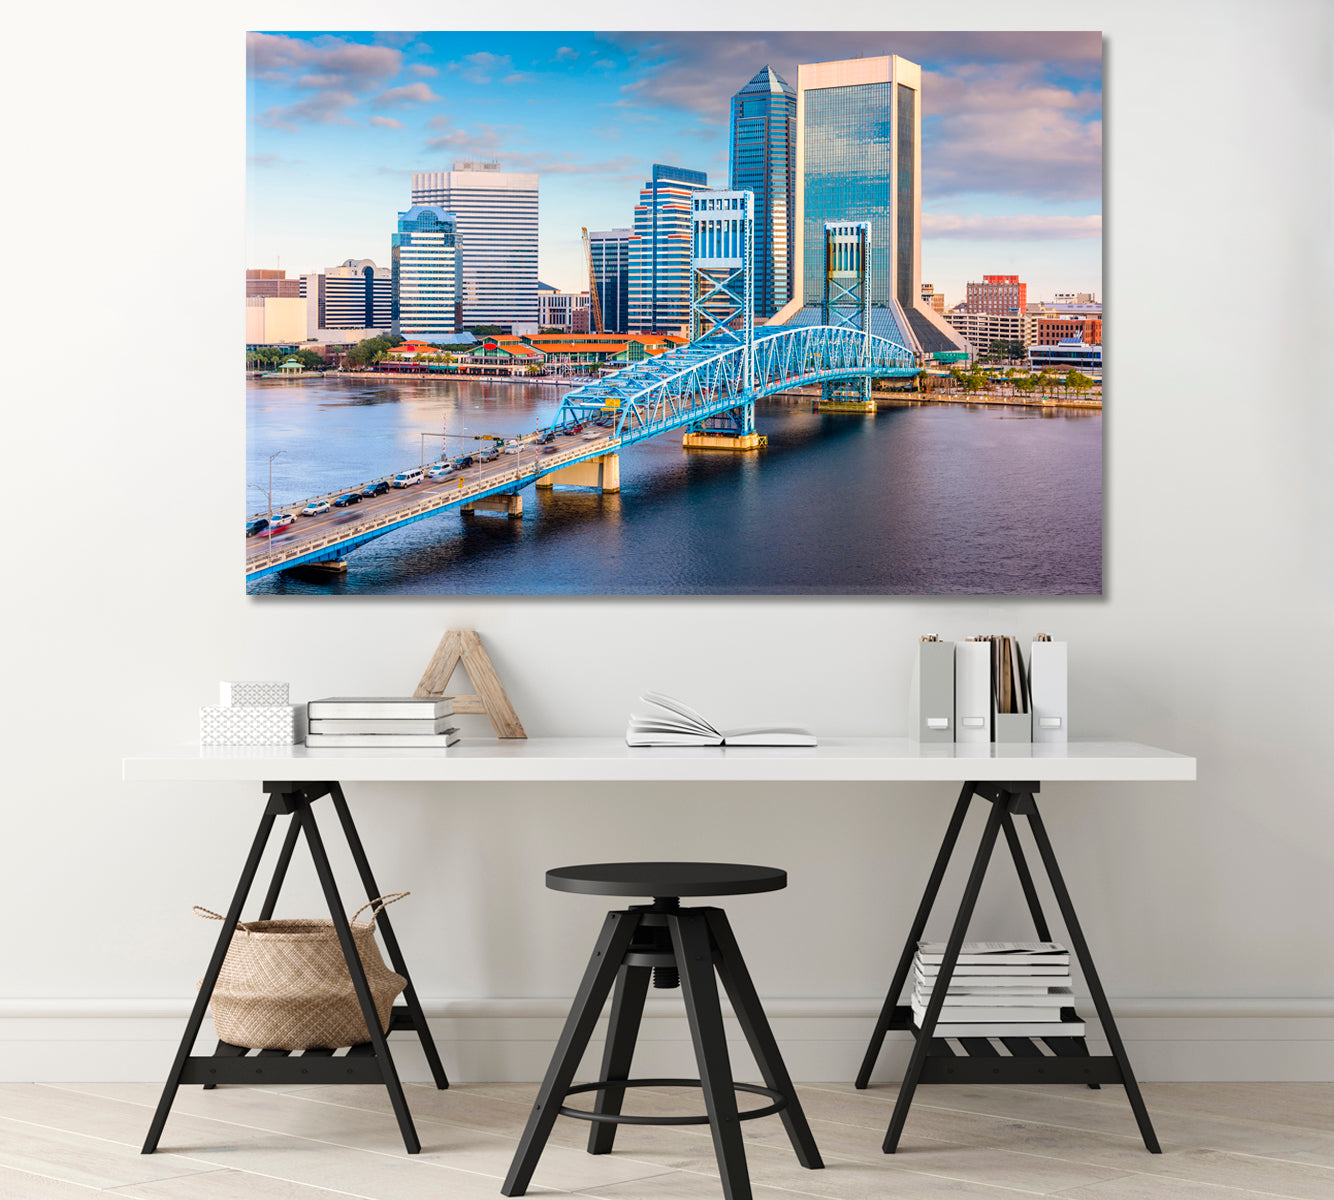 Skyscrapers Jacksonville and Blue Bridge Canvas Print-Canvas Print-CetArt-1 Panel-24x16 inches-CetArt